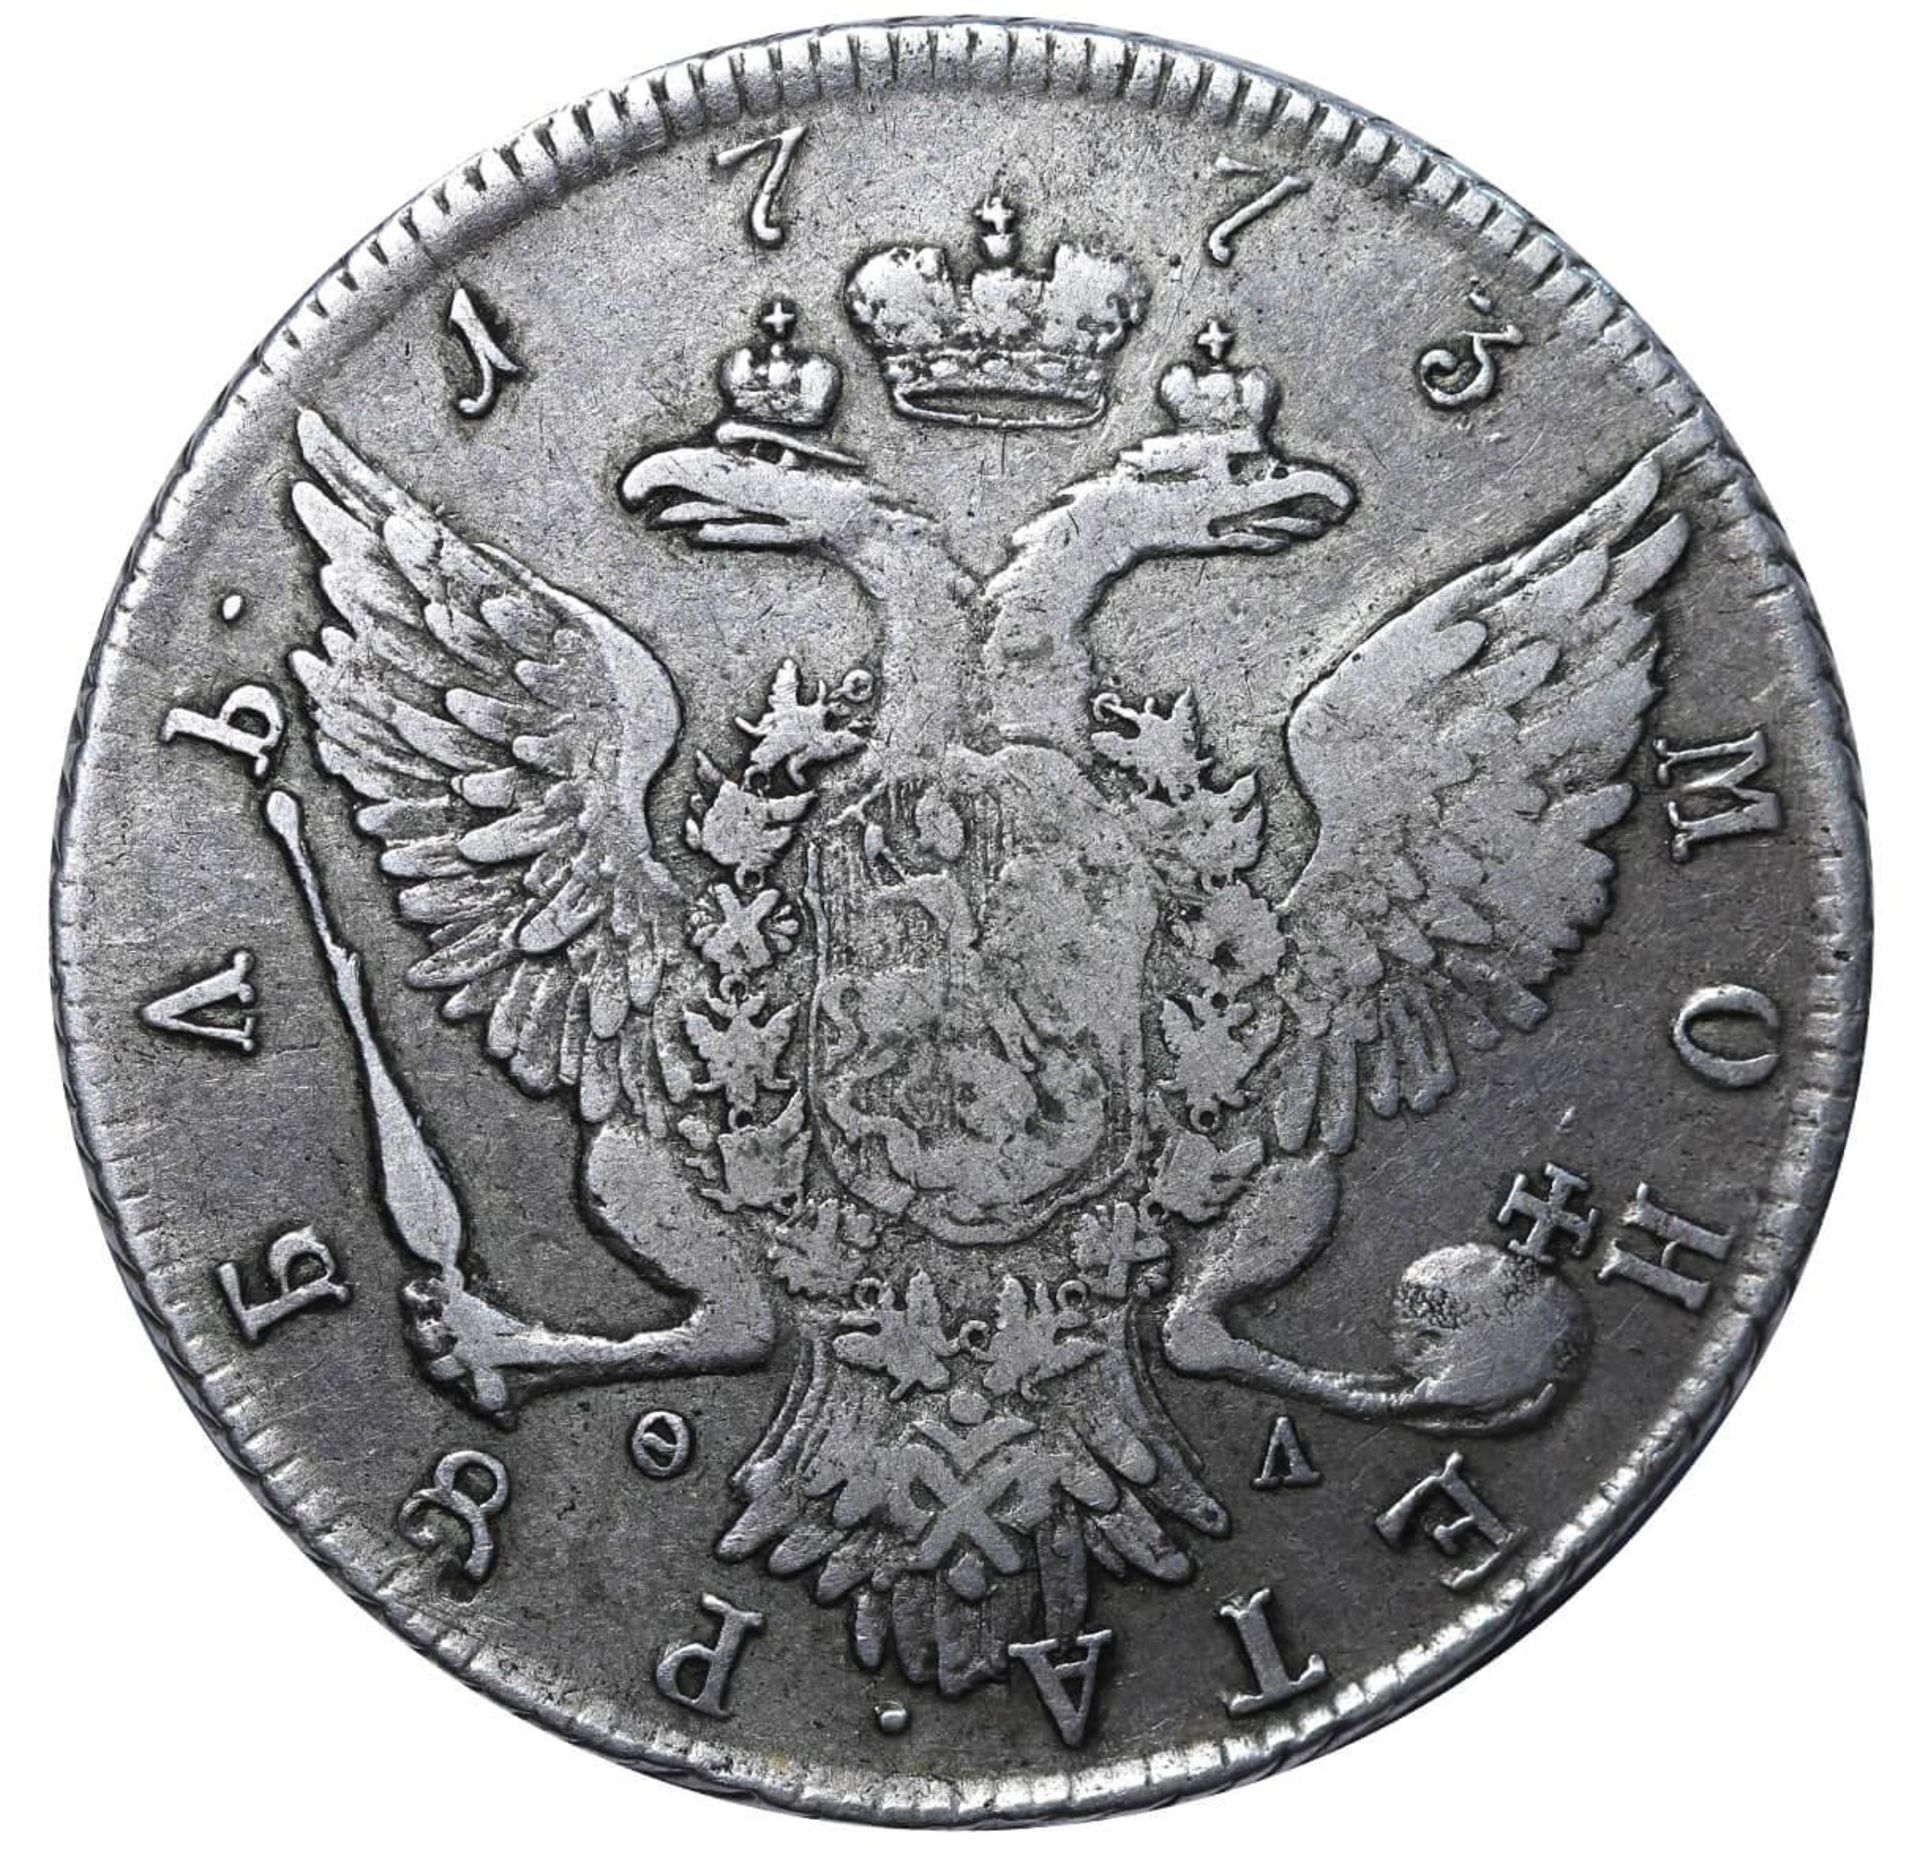 Russian Empire, 1 Rouble, 1773 year, SPB-FL, TI - Image 3 of 3